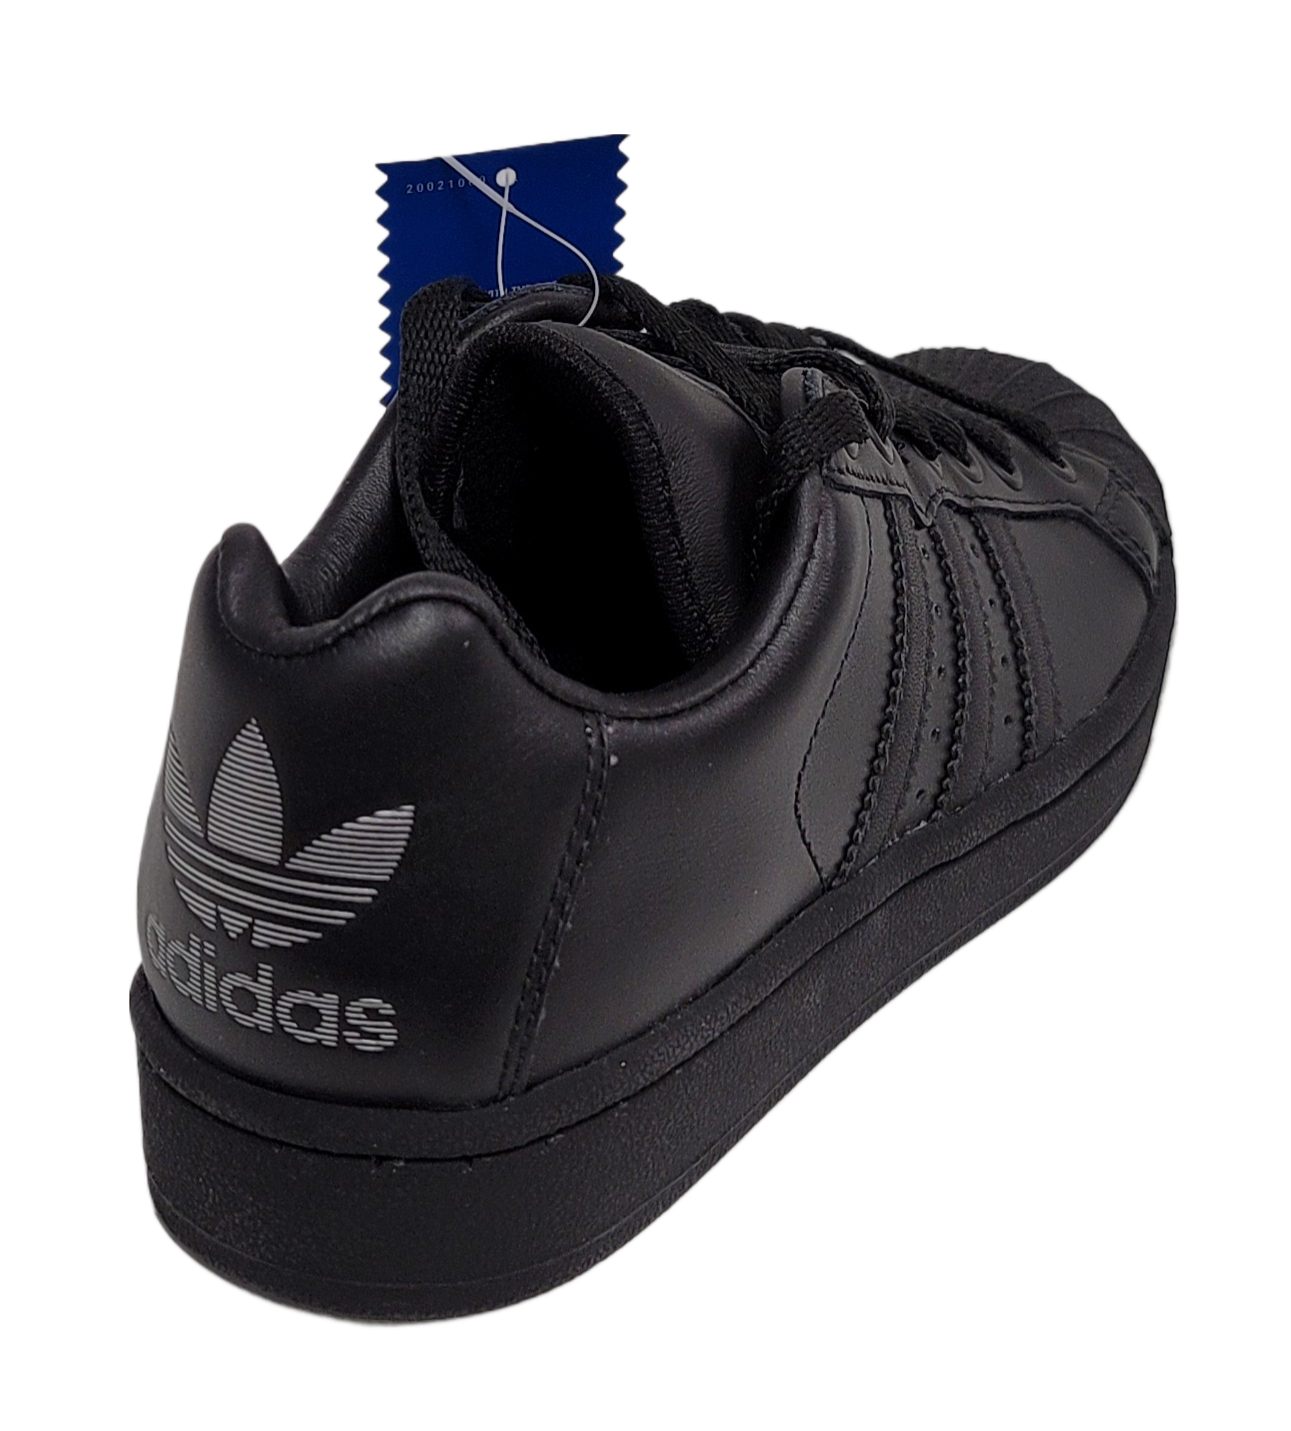 adidas Men Lifestyle Ultrastar Leather Sneaker Black / Silver Metallic 011387